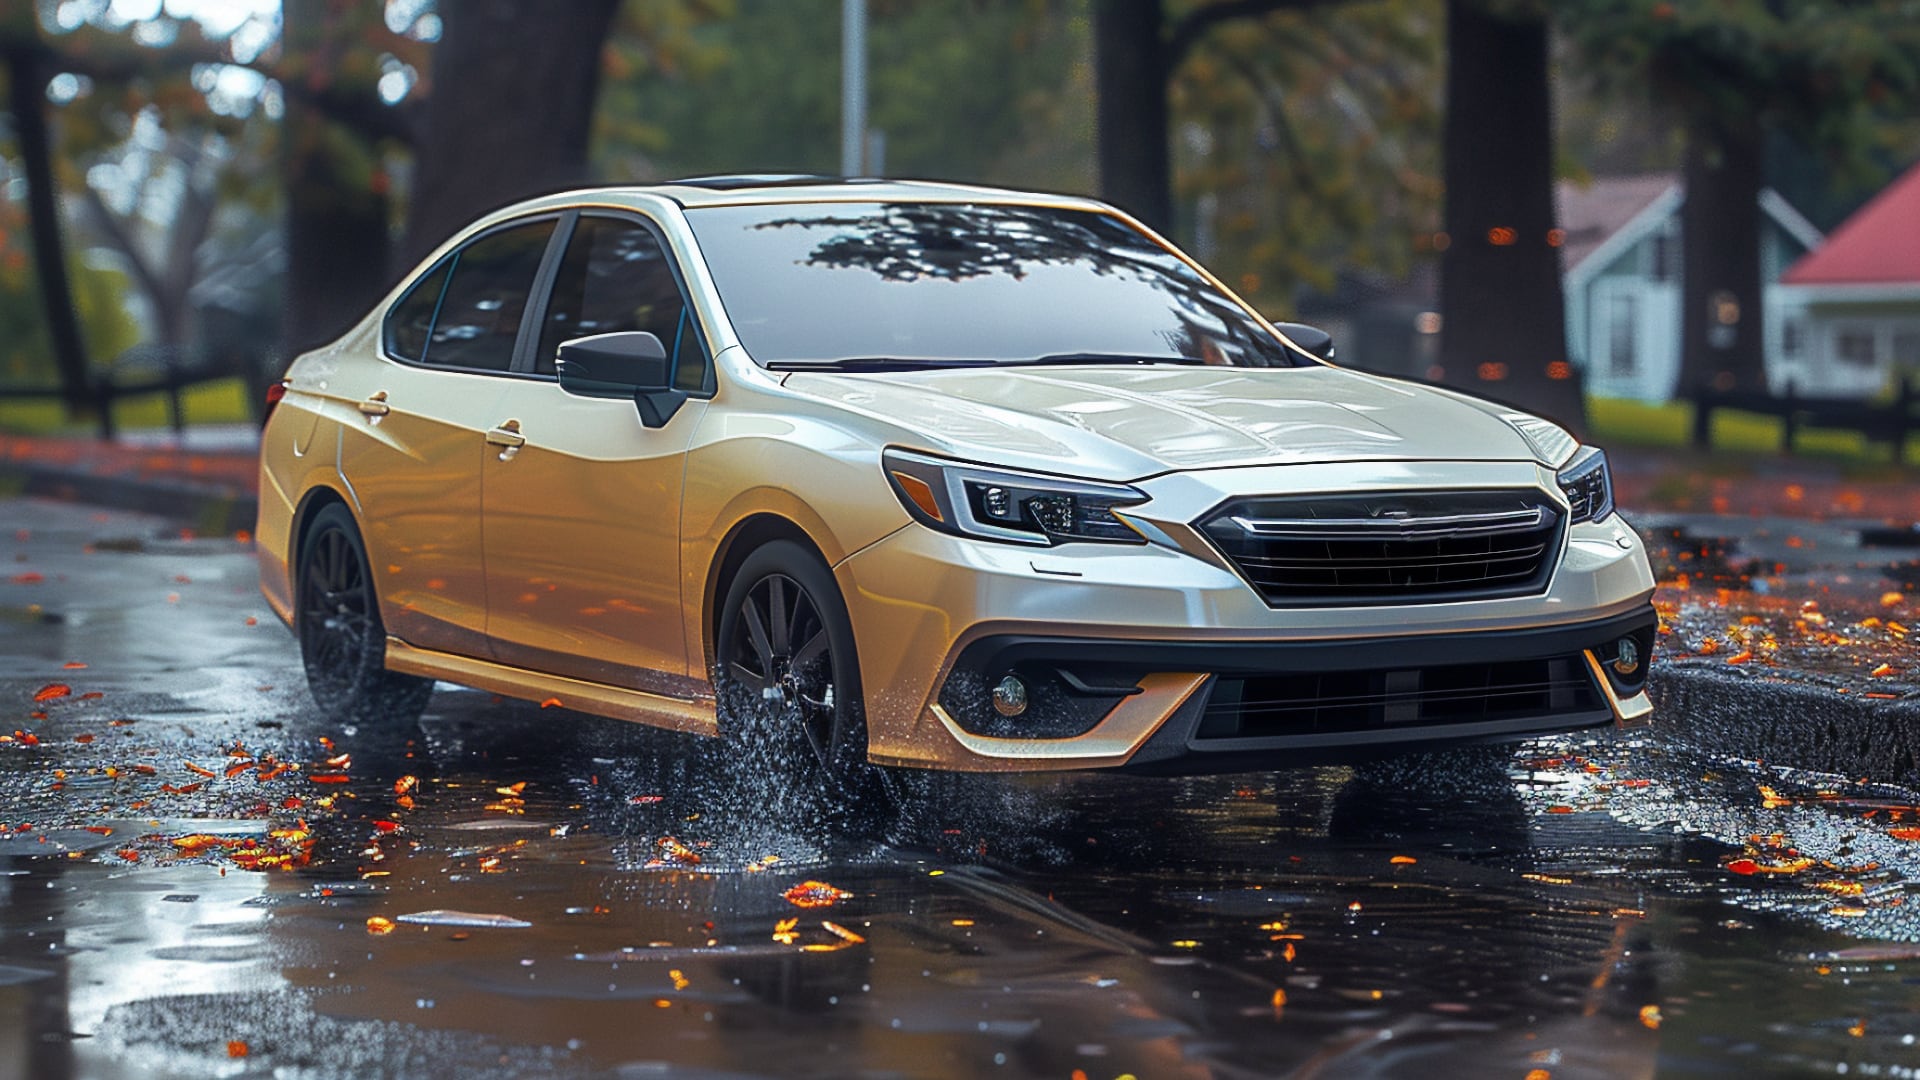 The 2019 Subaru Impreza is driving in the rain.